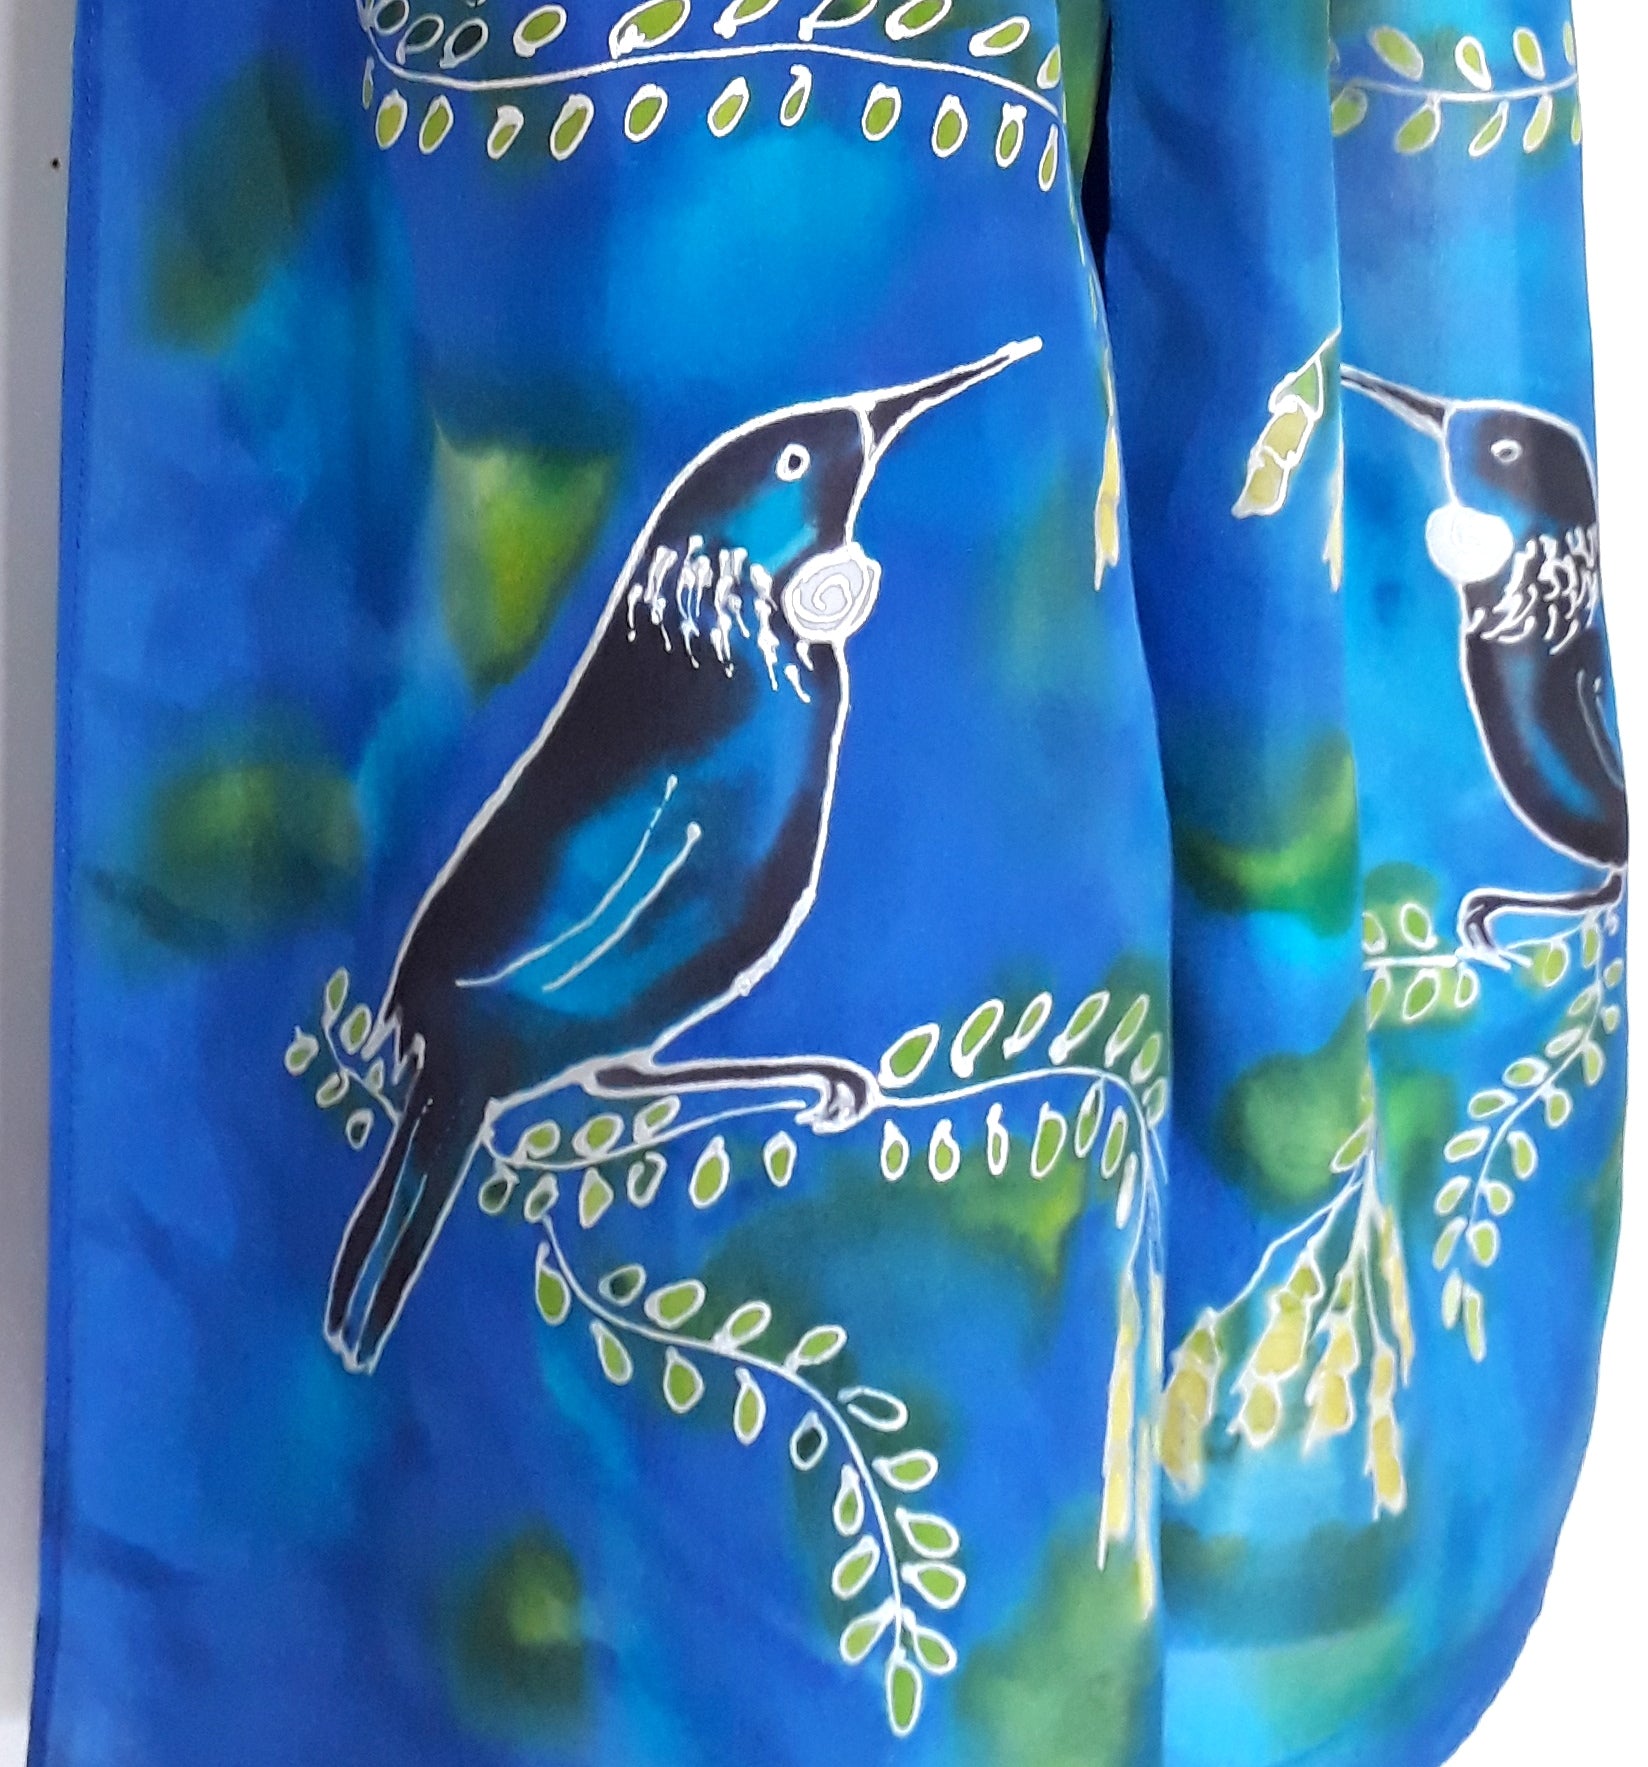 Tui with Kowhai Tree - Hand painted Silk Scarf - Satherley Silks NZ